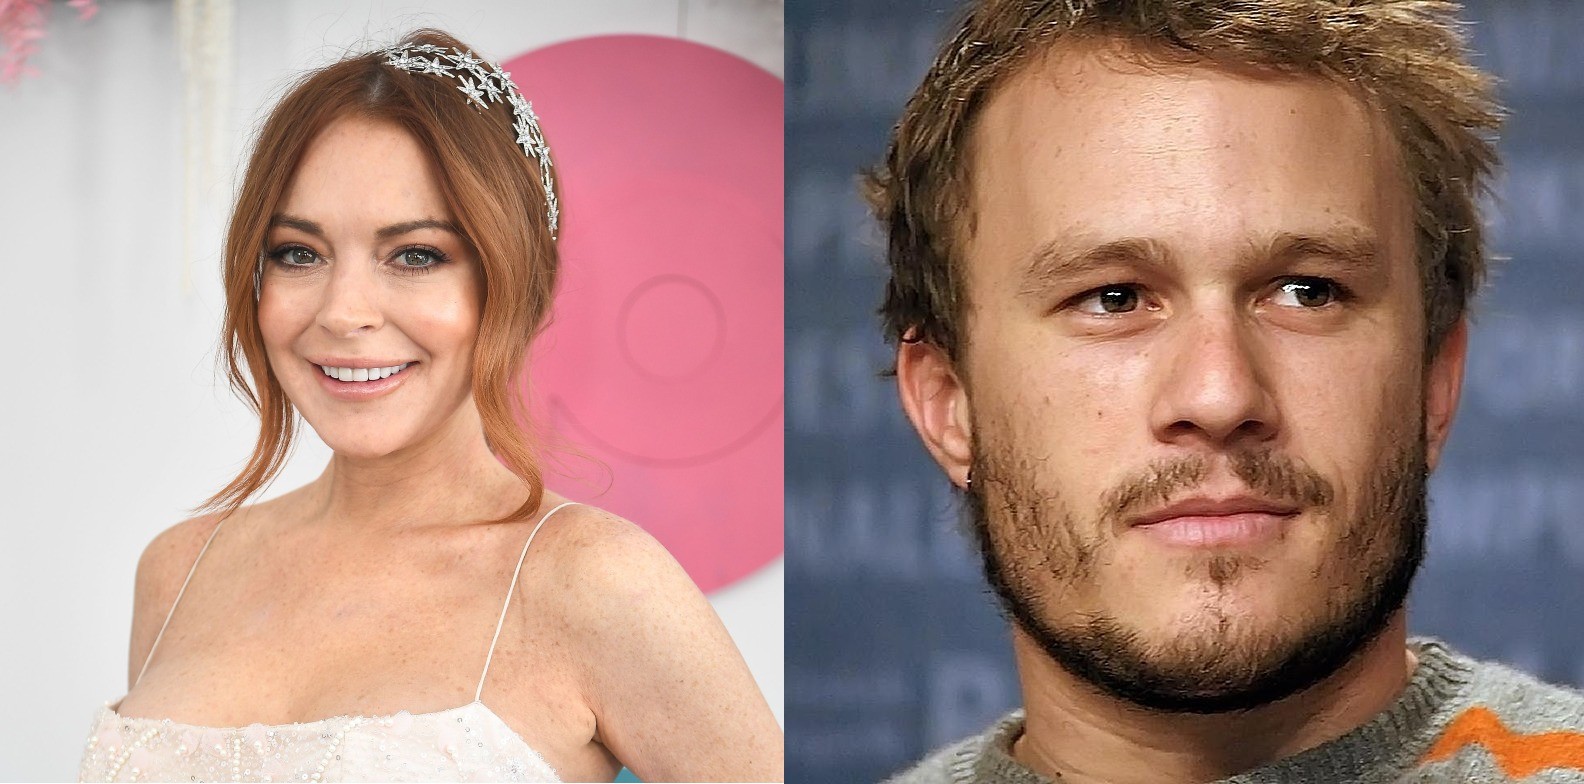 The dating rumors surrounding Heath Ledger and Lindsay Lohan